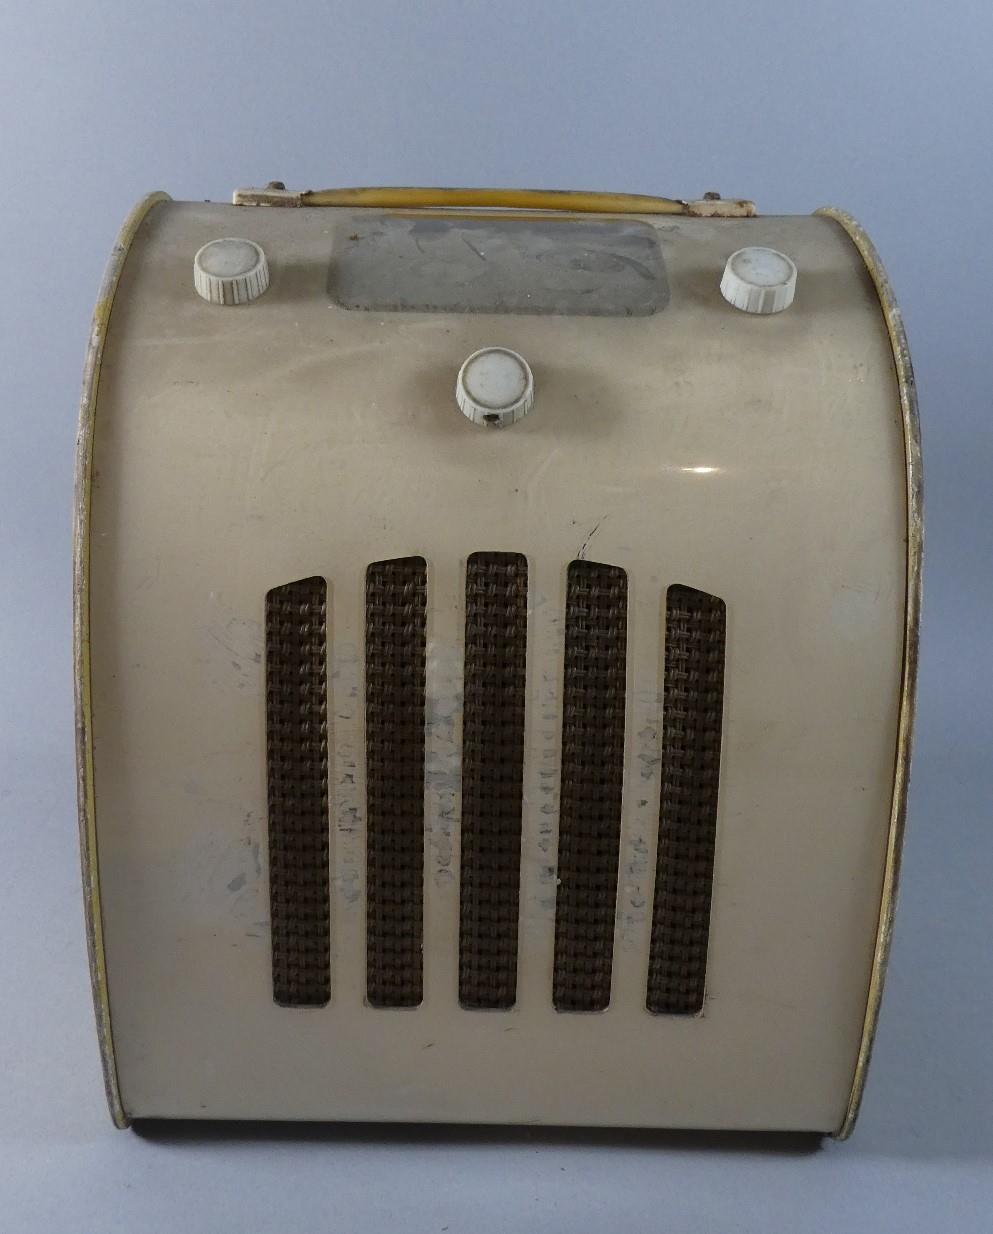 A Vintage Radio, 33cm high